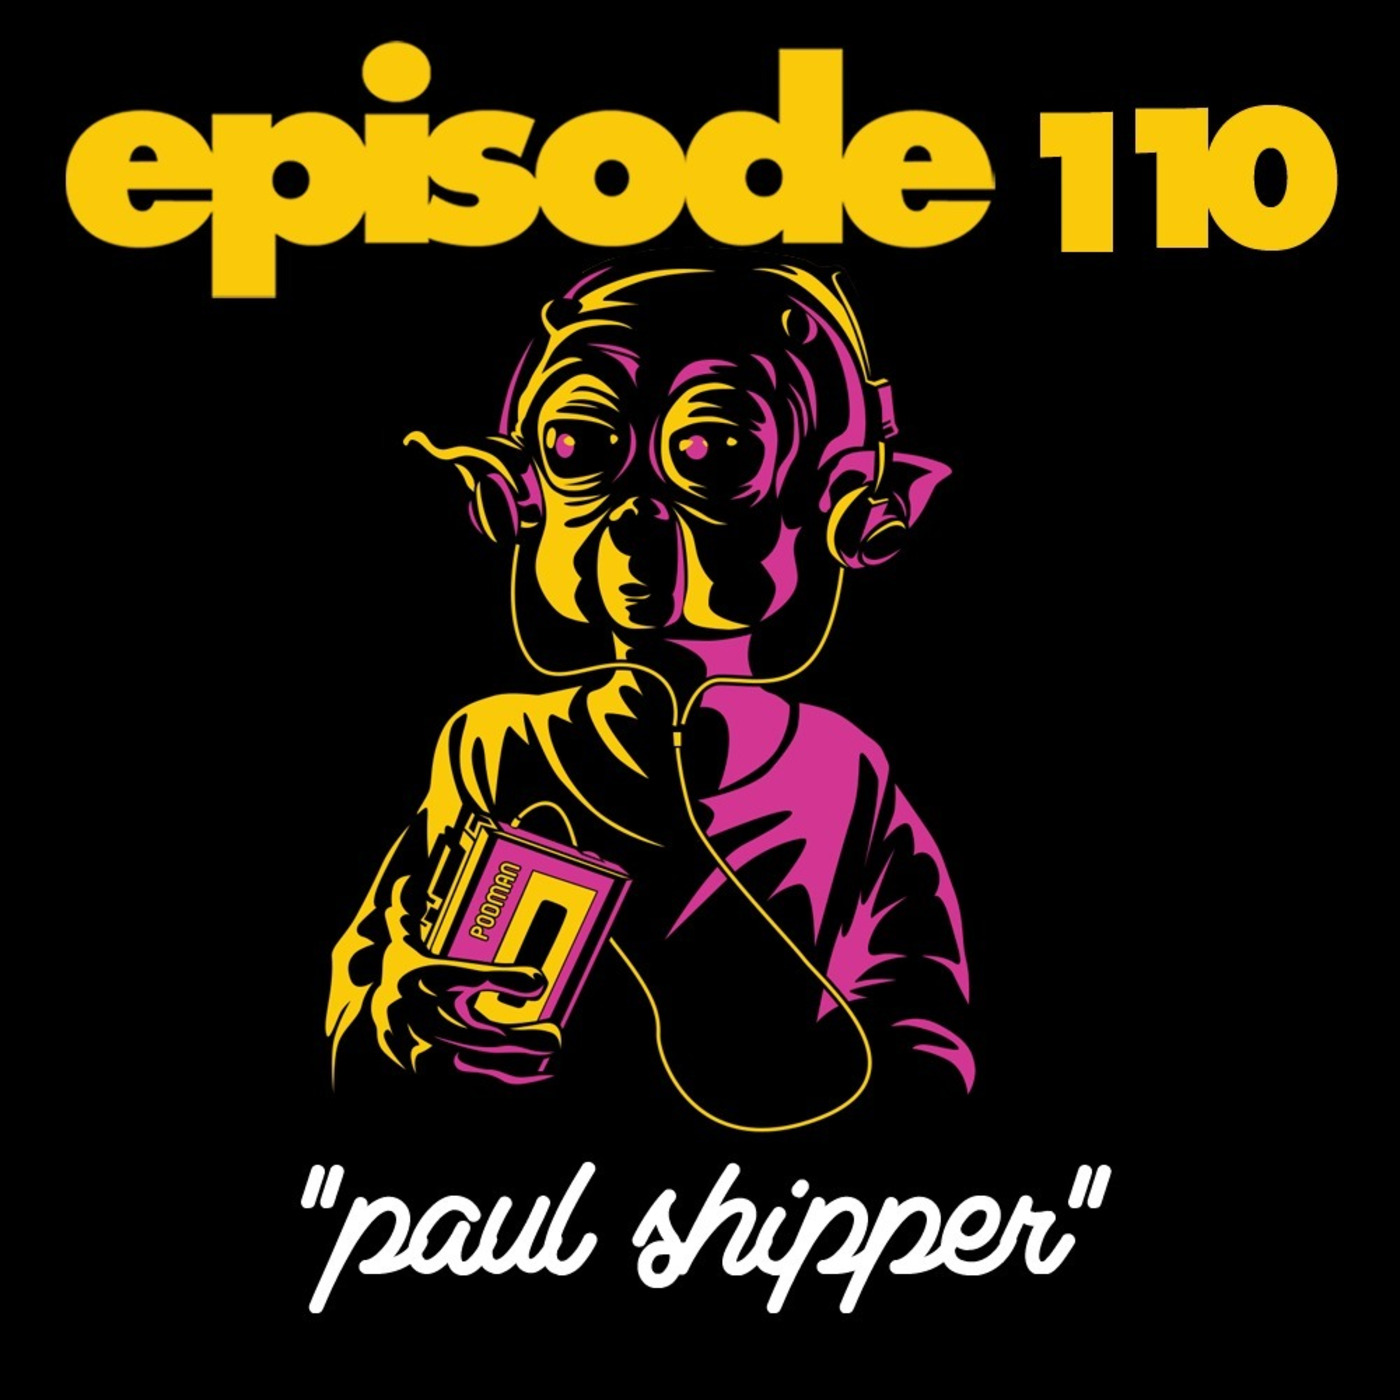 Episode 110: Paul Shipper